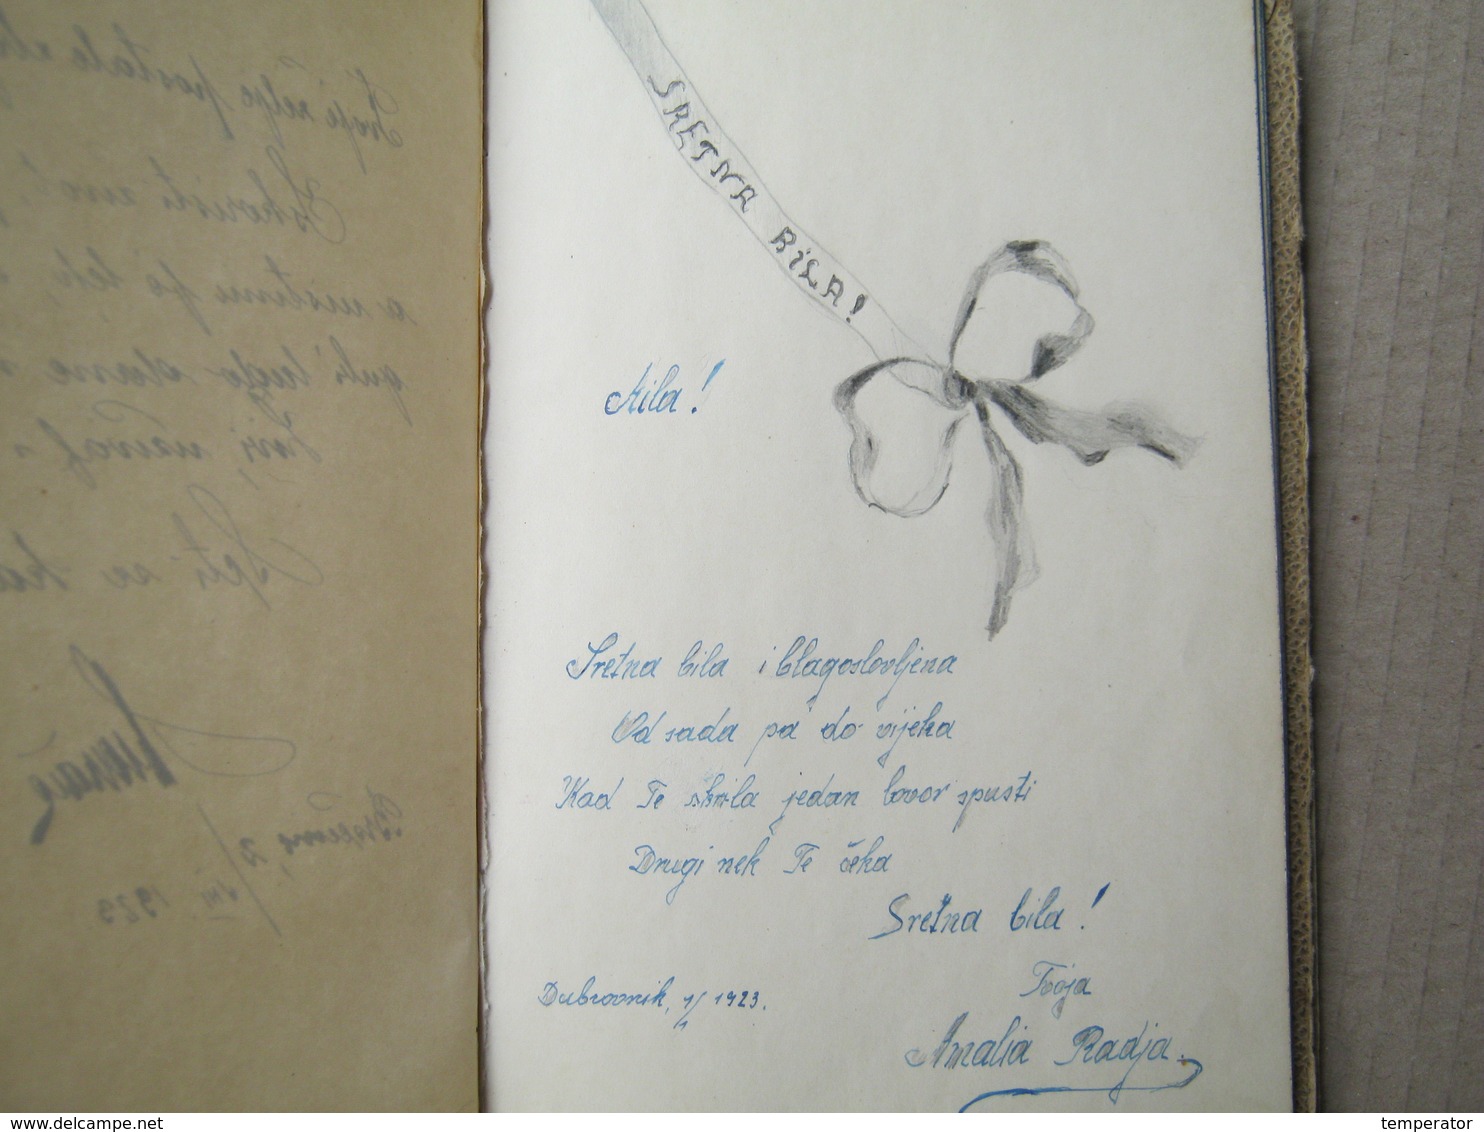 Scrapbook, Spomenar - Croatia / Brsečine, Dubrovnik, Ragusa - Nice poems, 1922/26.